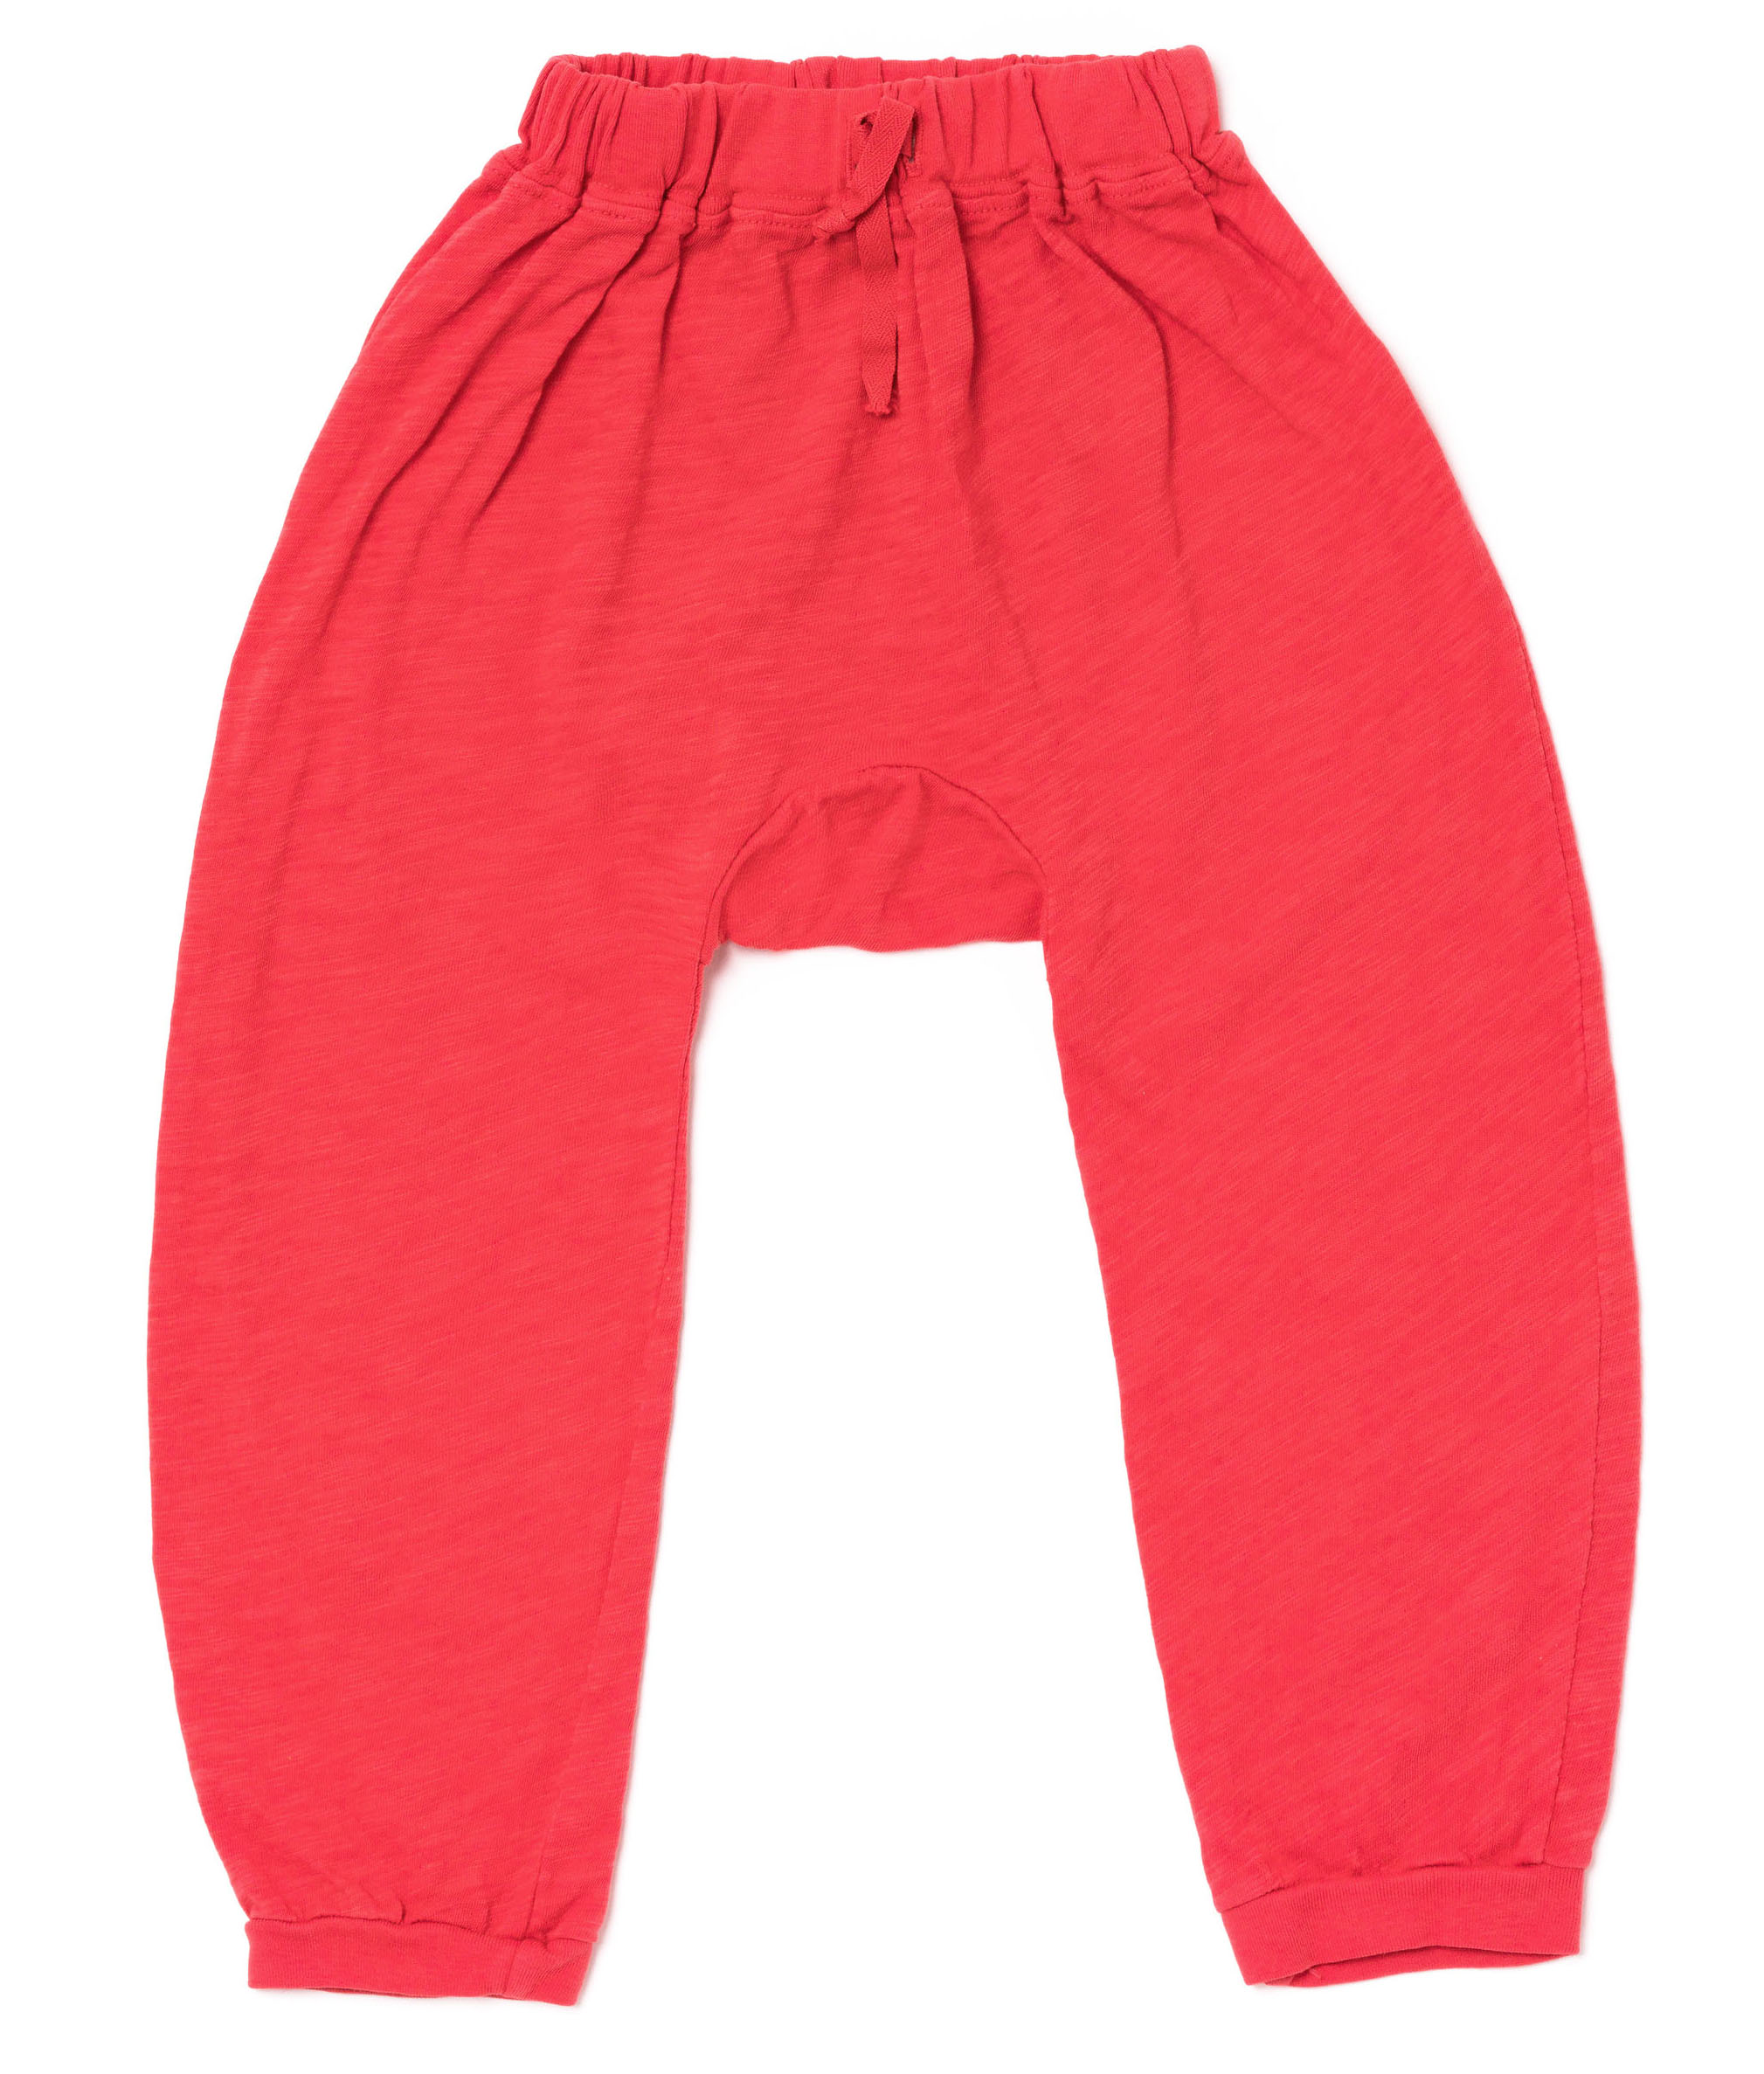                                           Coral Pink Harem Pants 